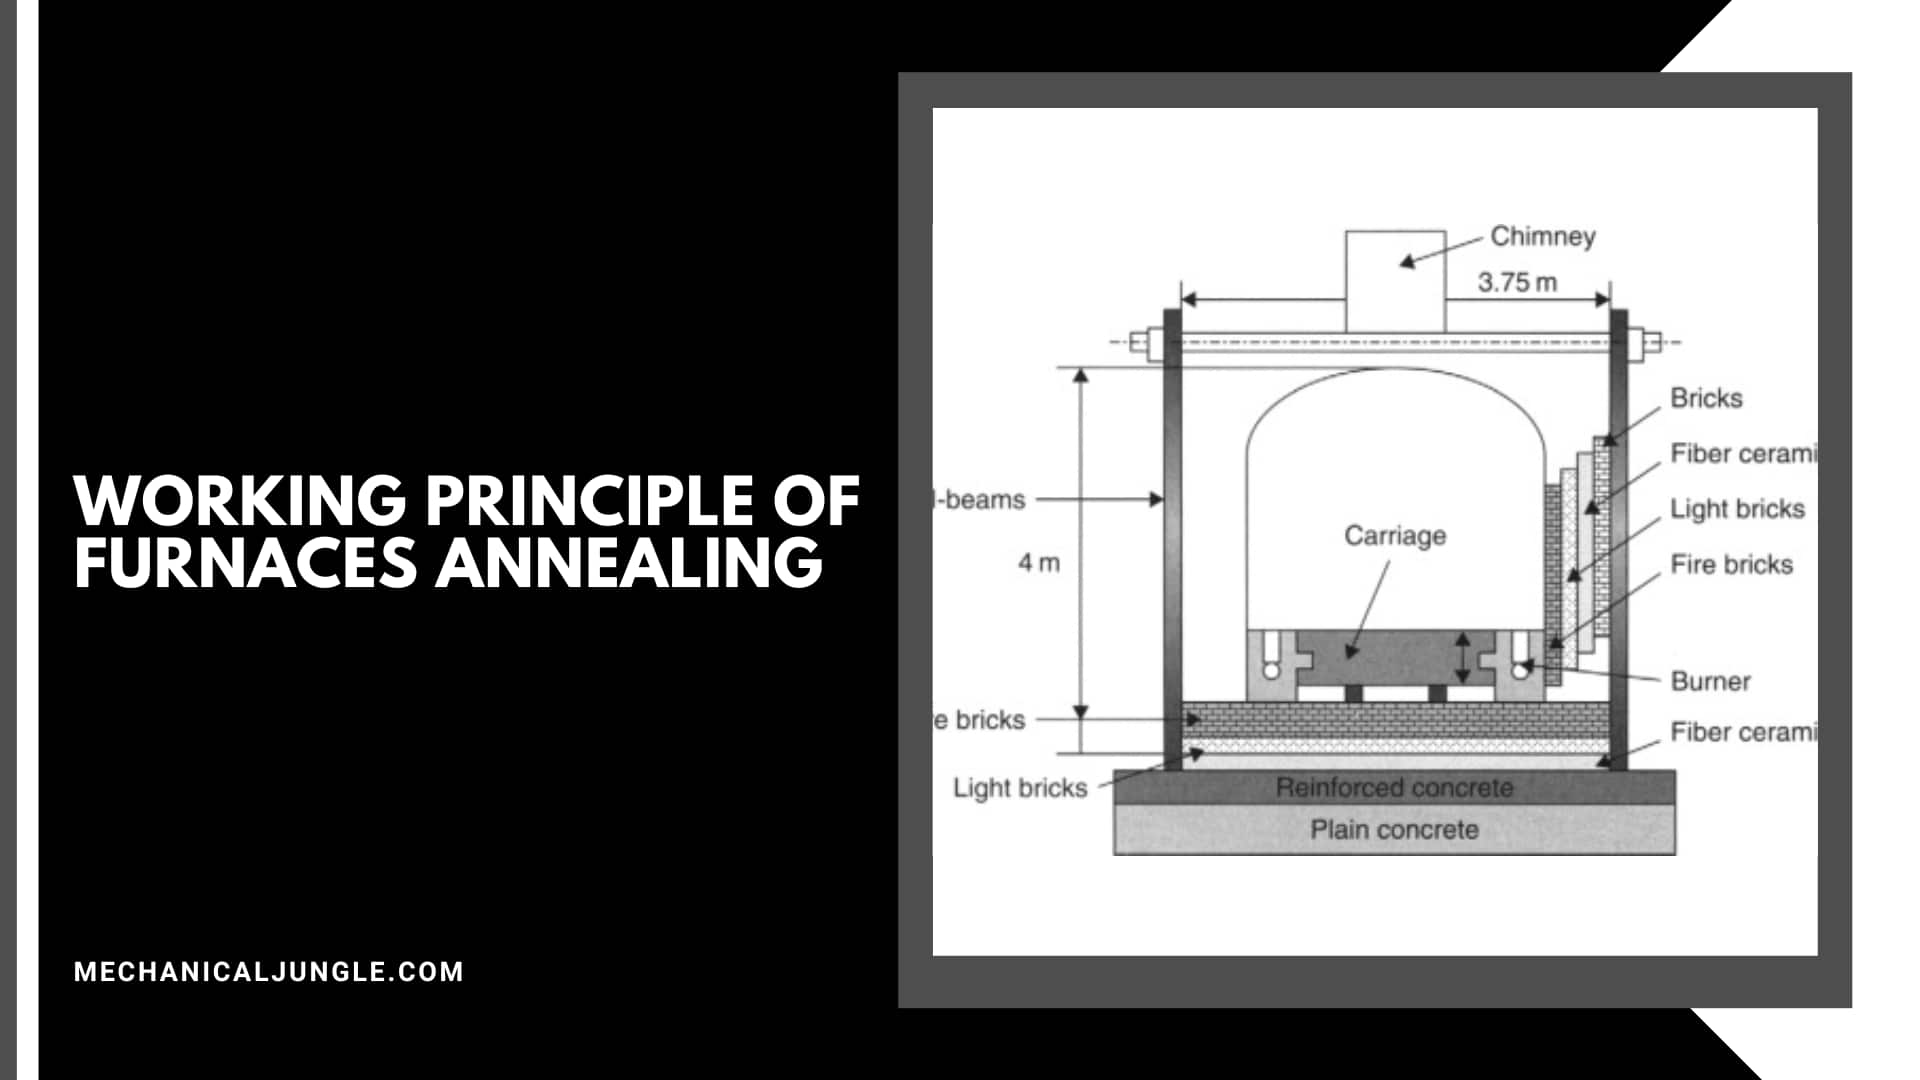 Working Principle of Furnaces Annealing